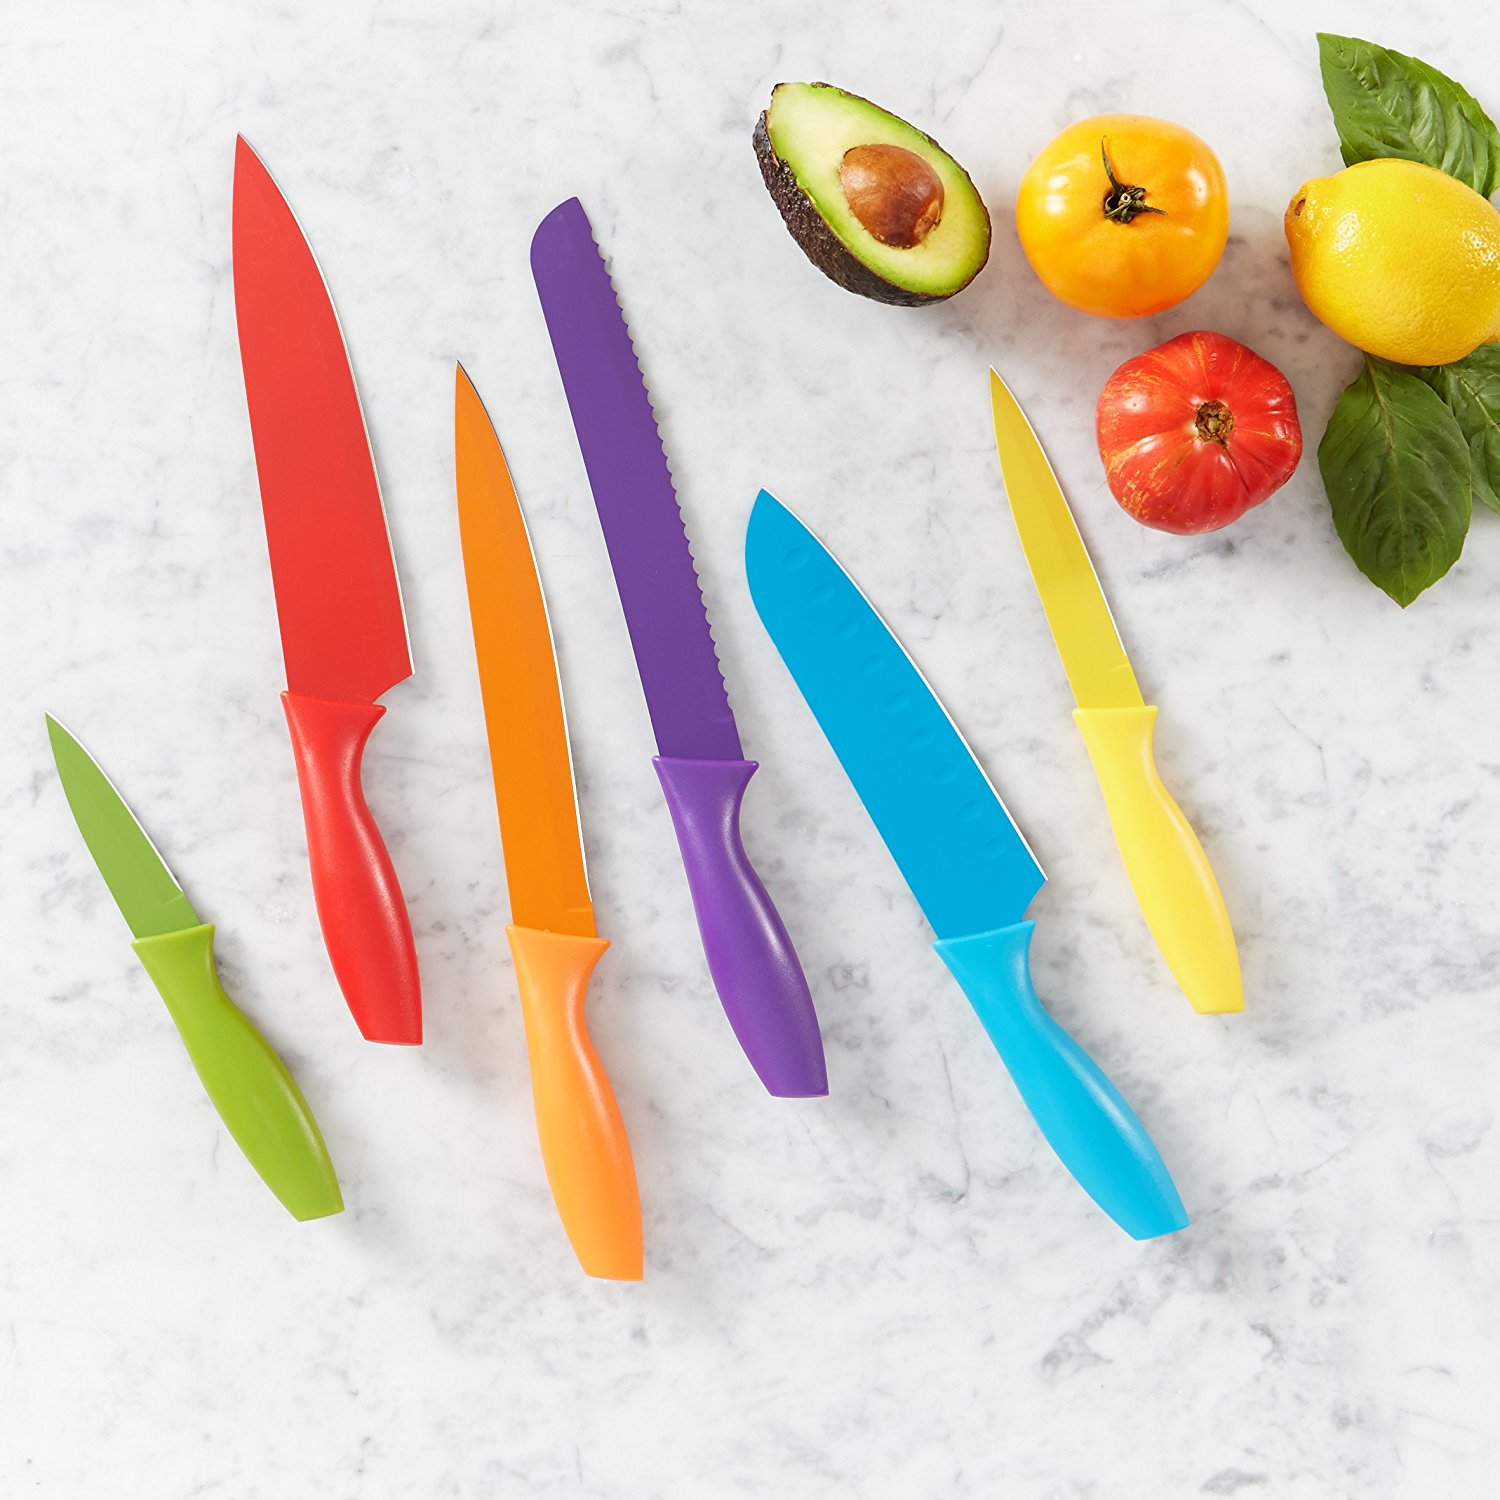 AmazonBasics 12-Piece Colored Knife Set Only $12.91!